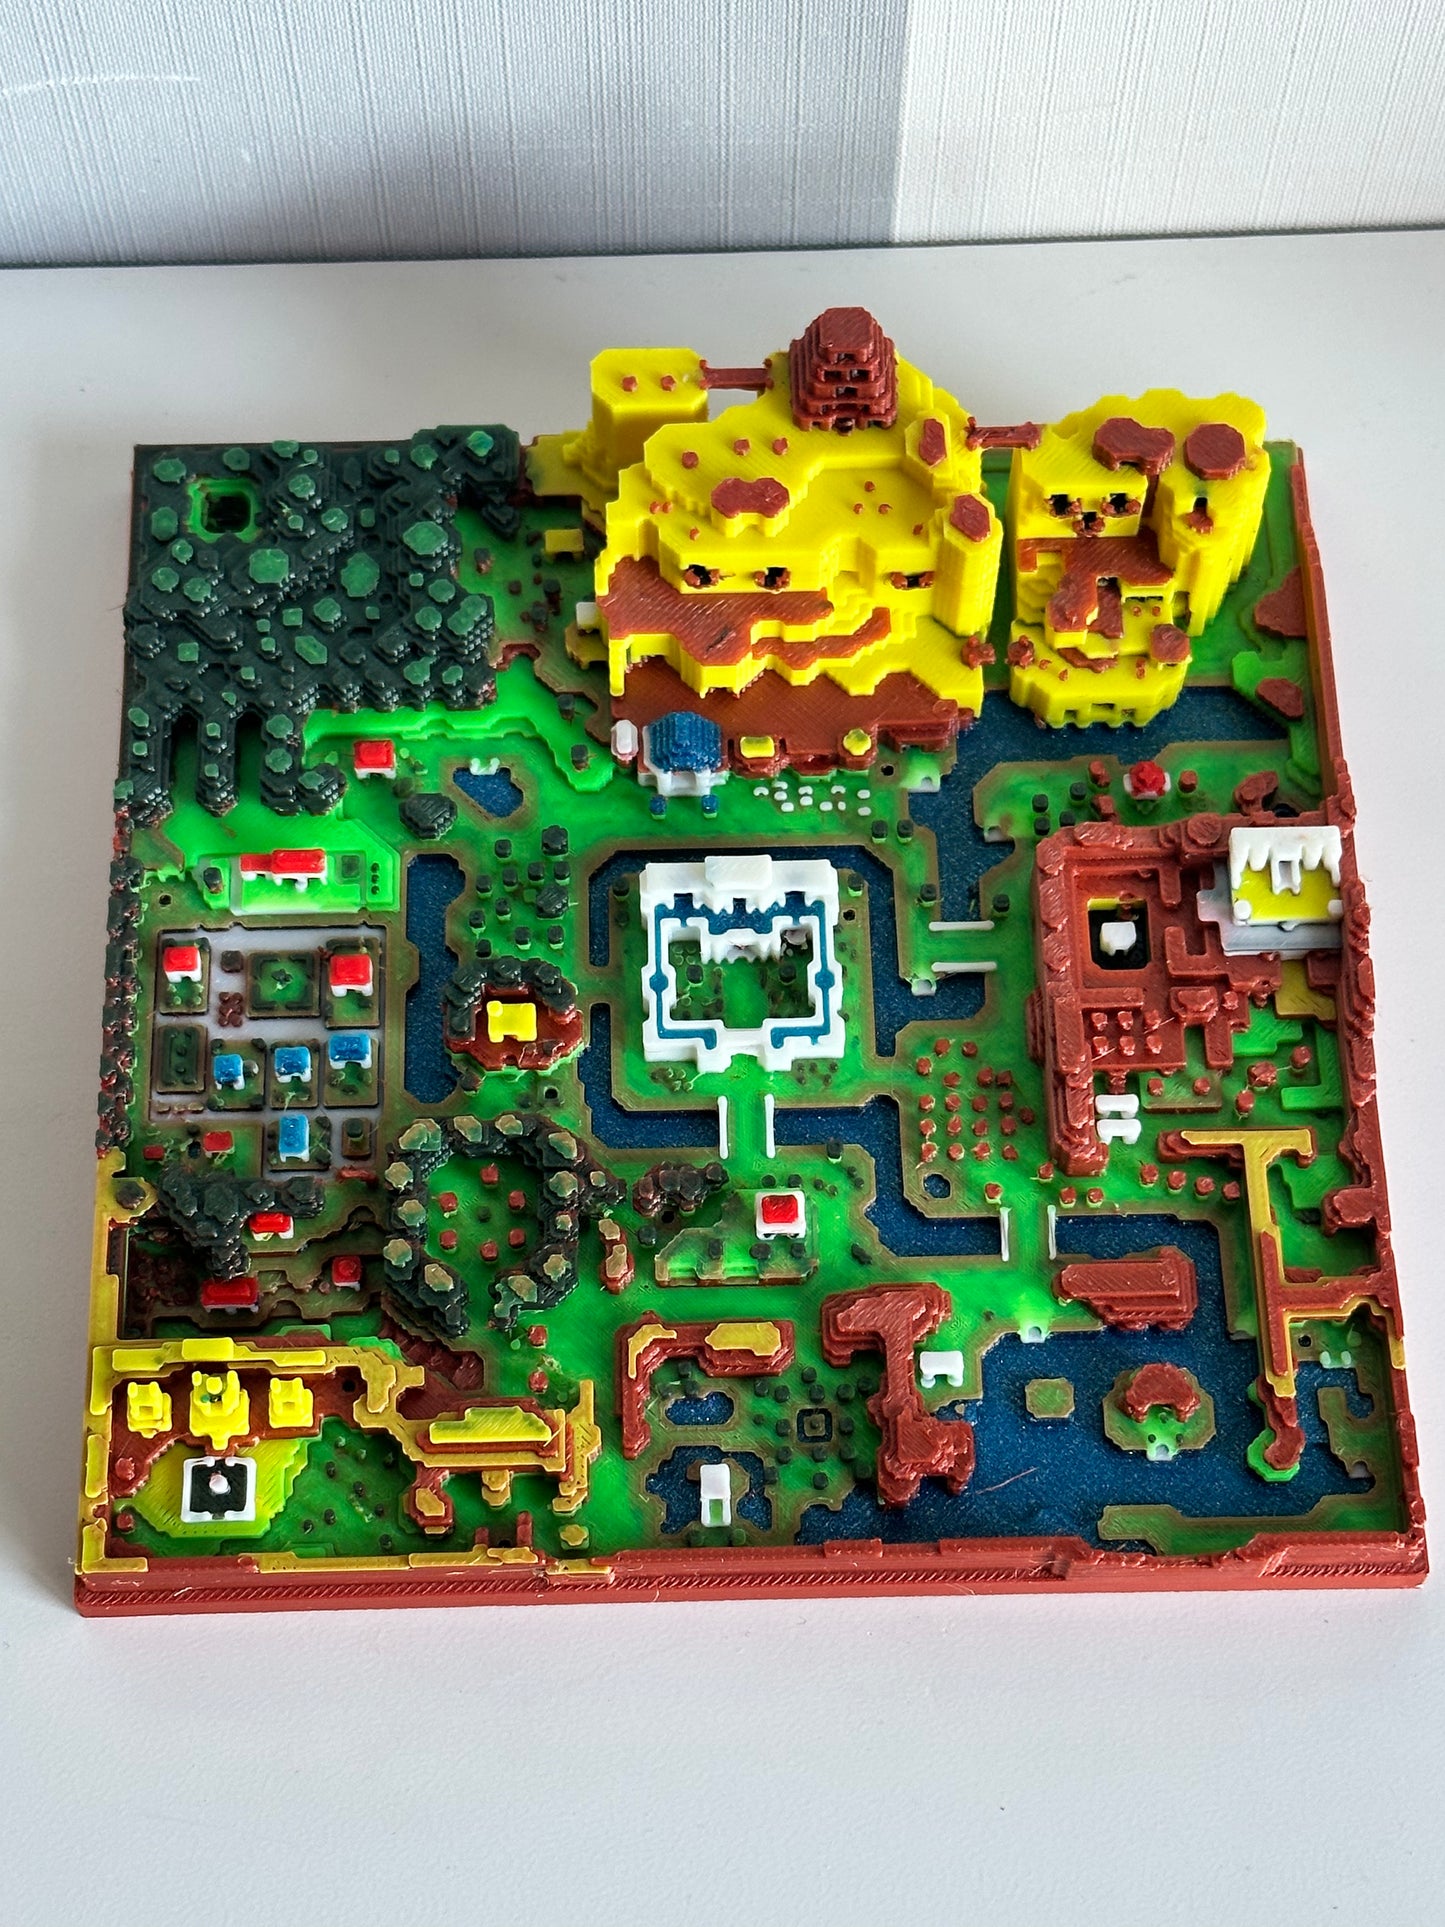 Mapa Zelda 3D